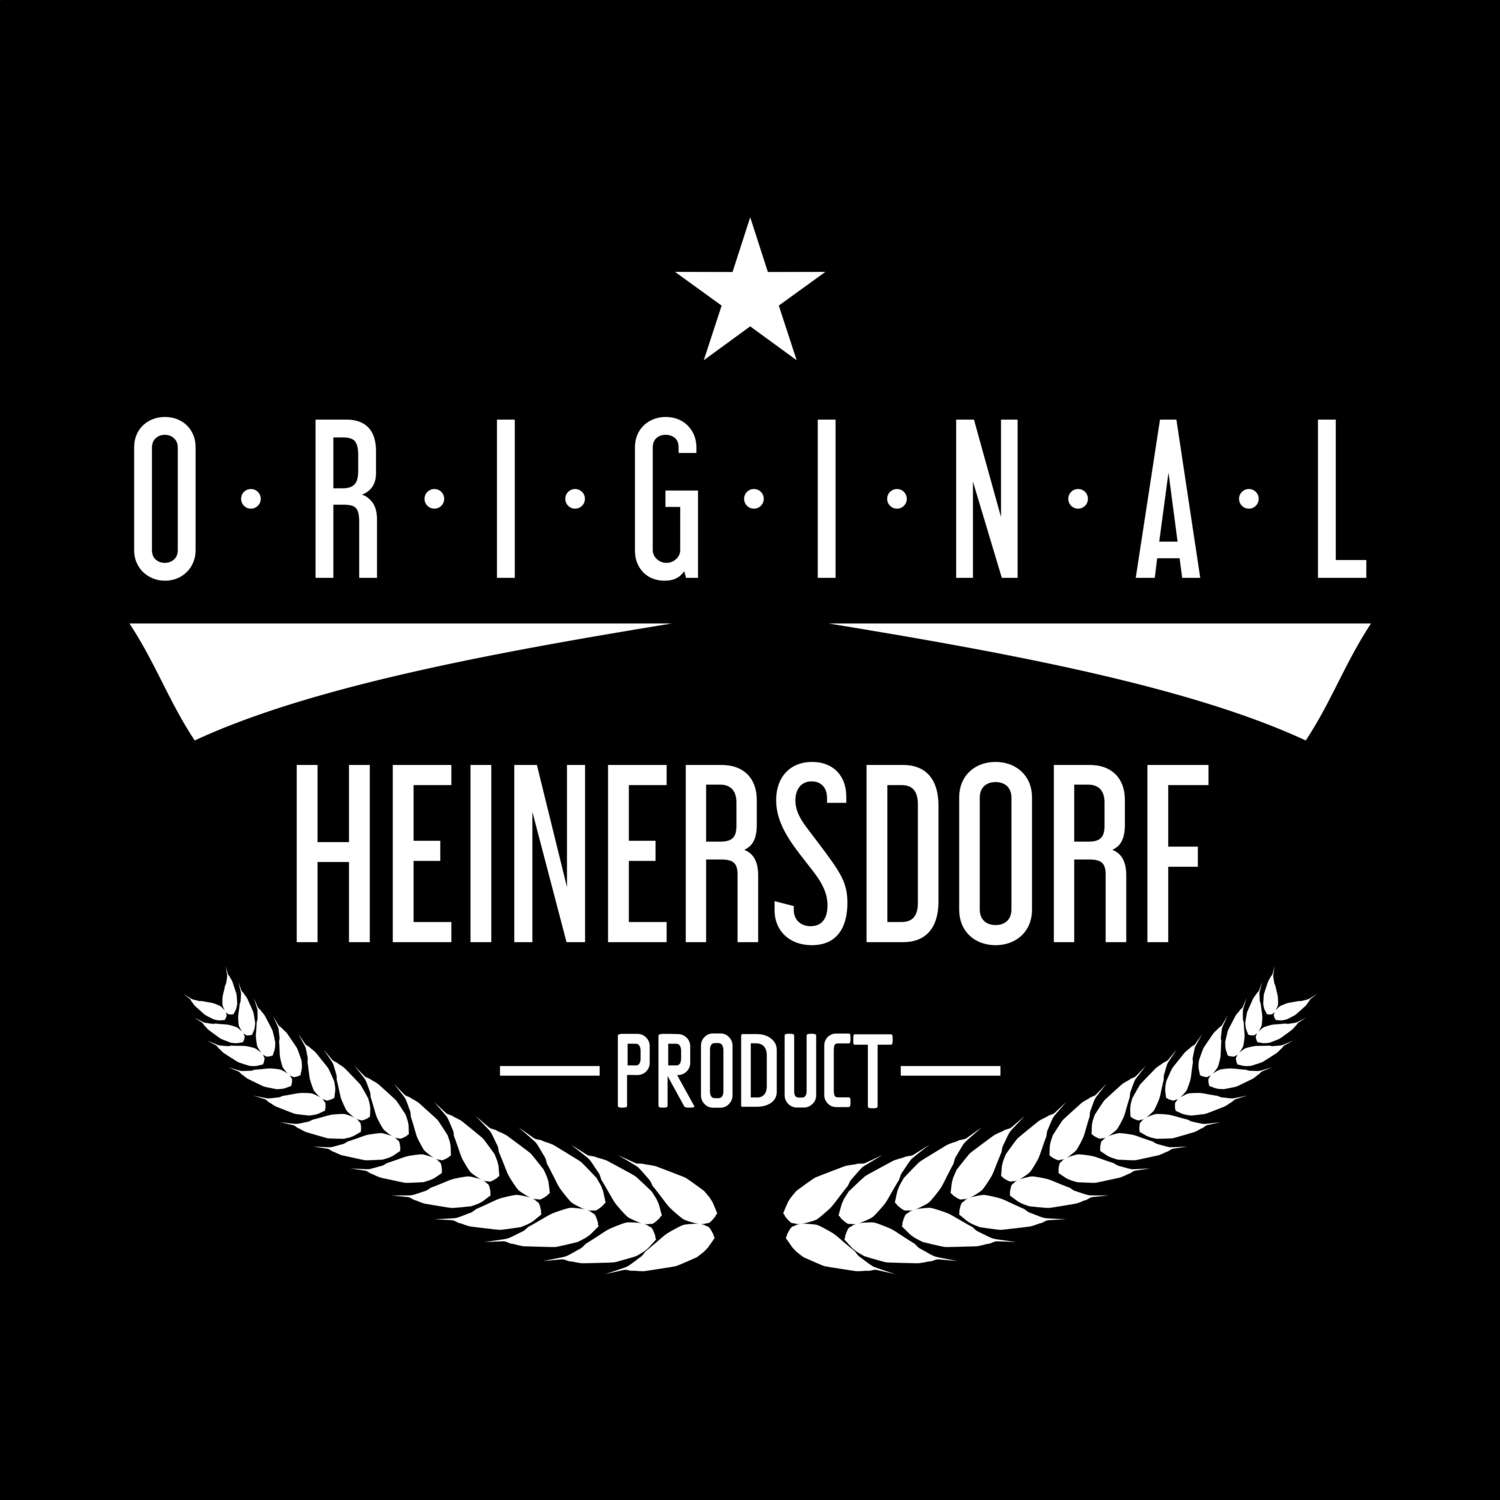 Heinersdorf T-Shirt »Original Product«